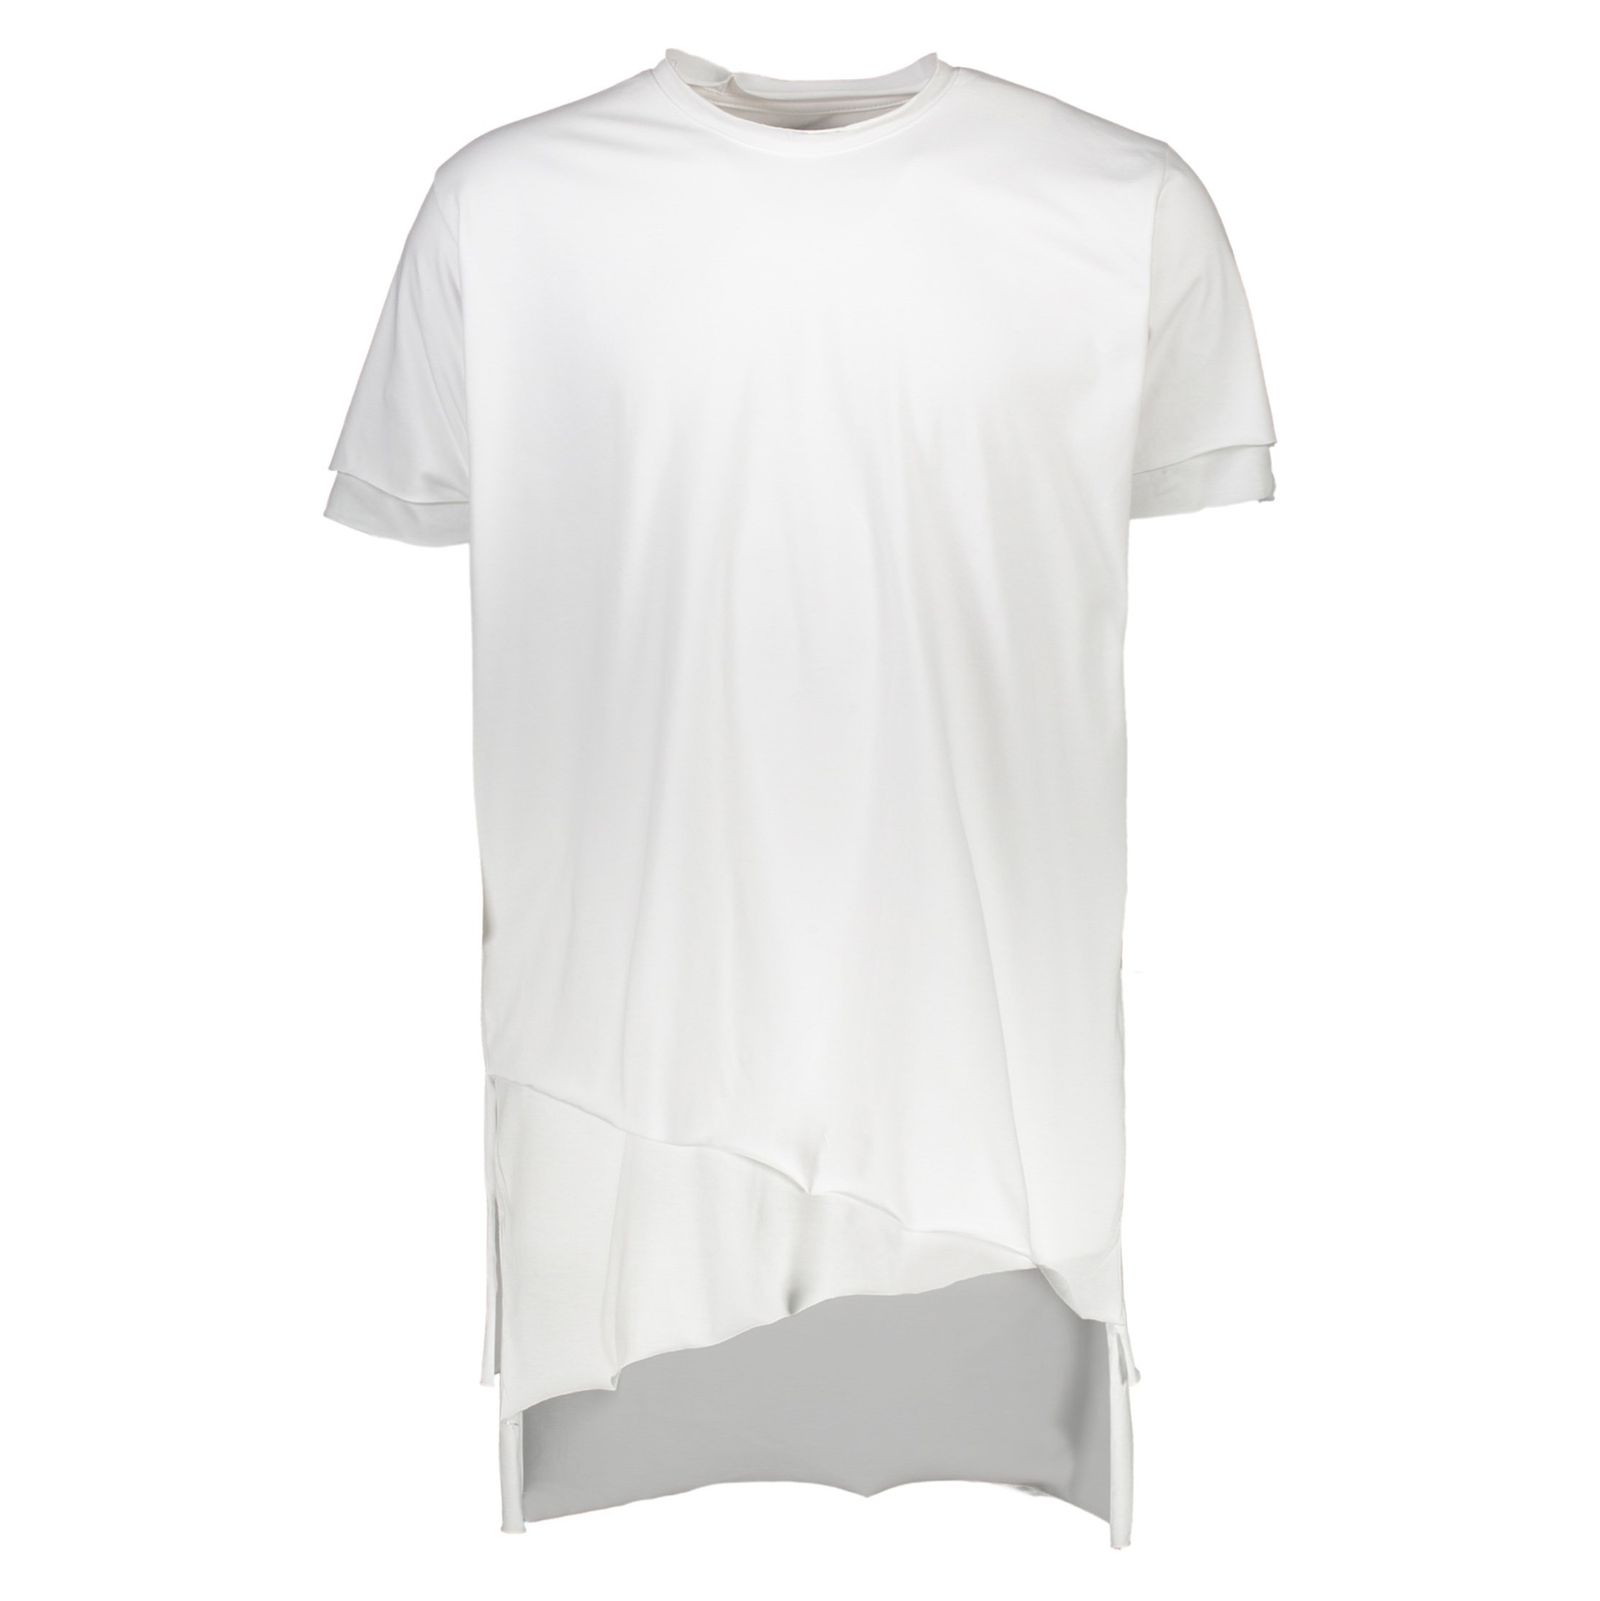 تی شرت ویسکوز یقه گرد مردانه Double Layer - یونیتی - سفيد - 1